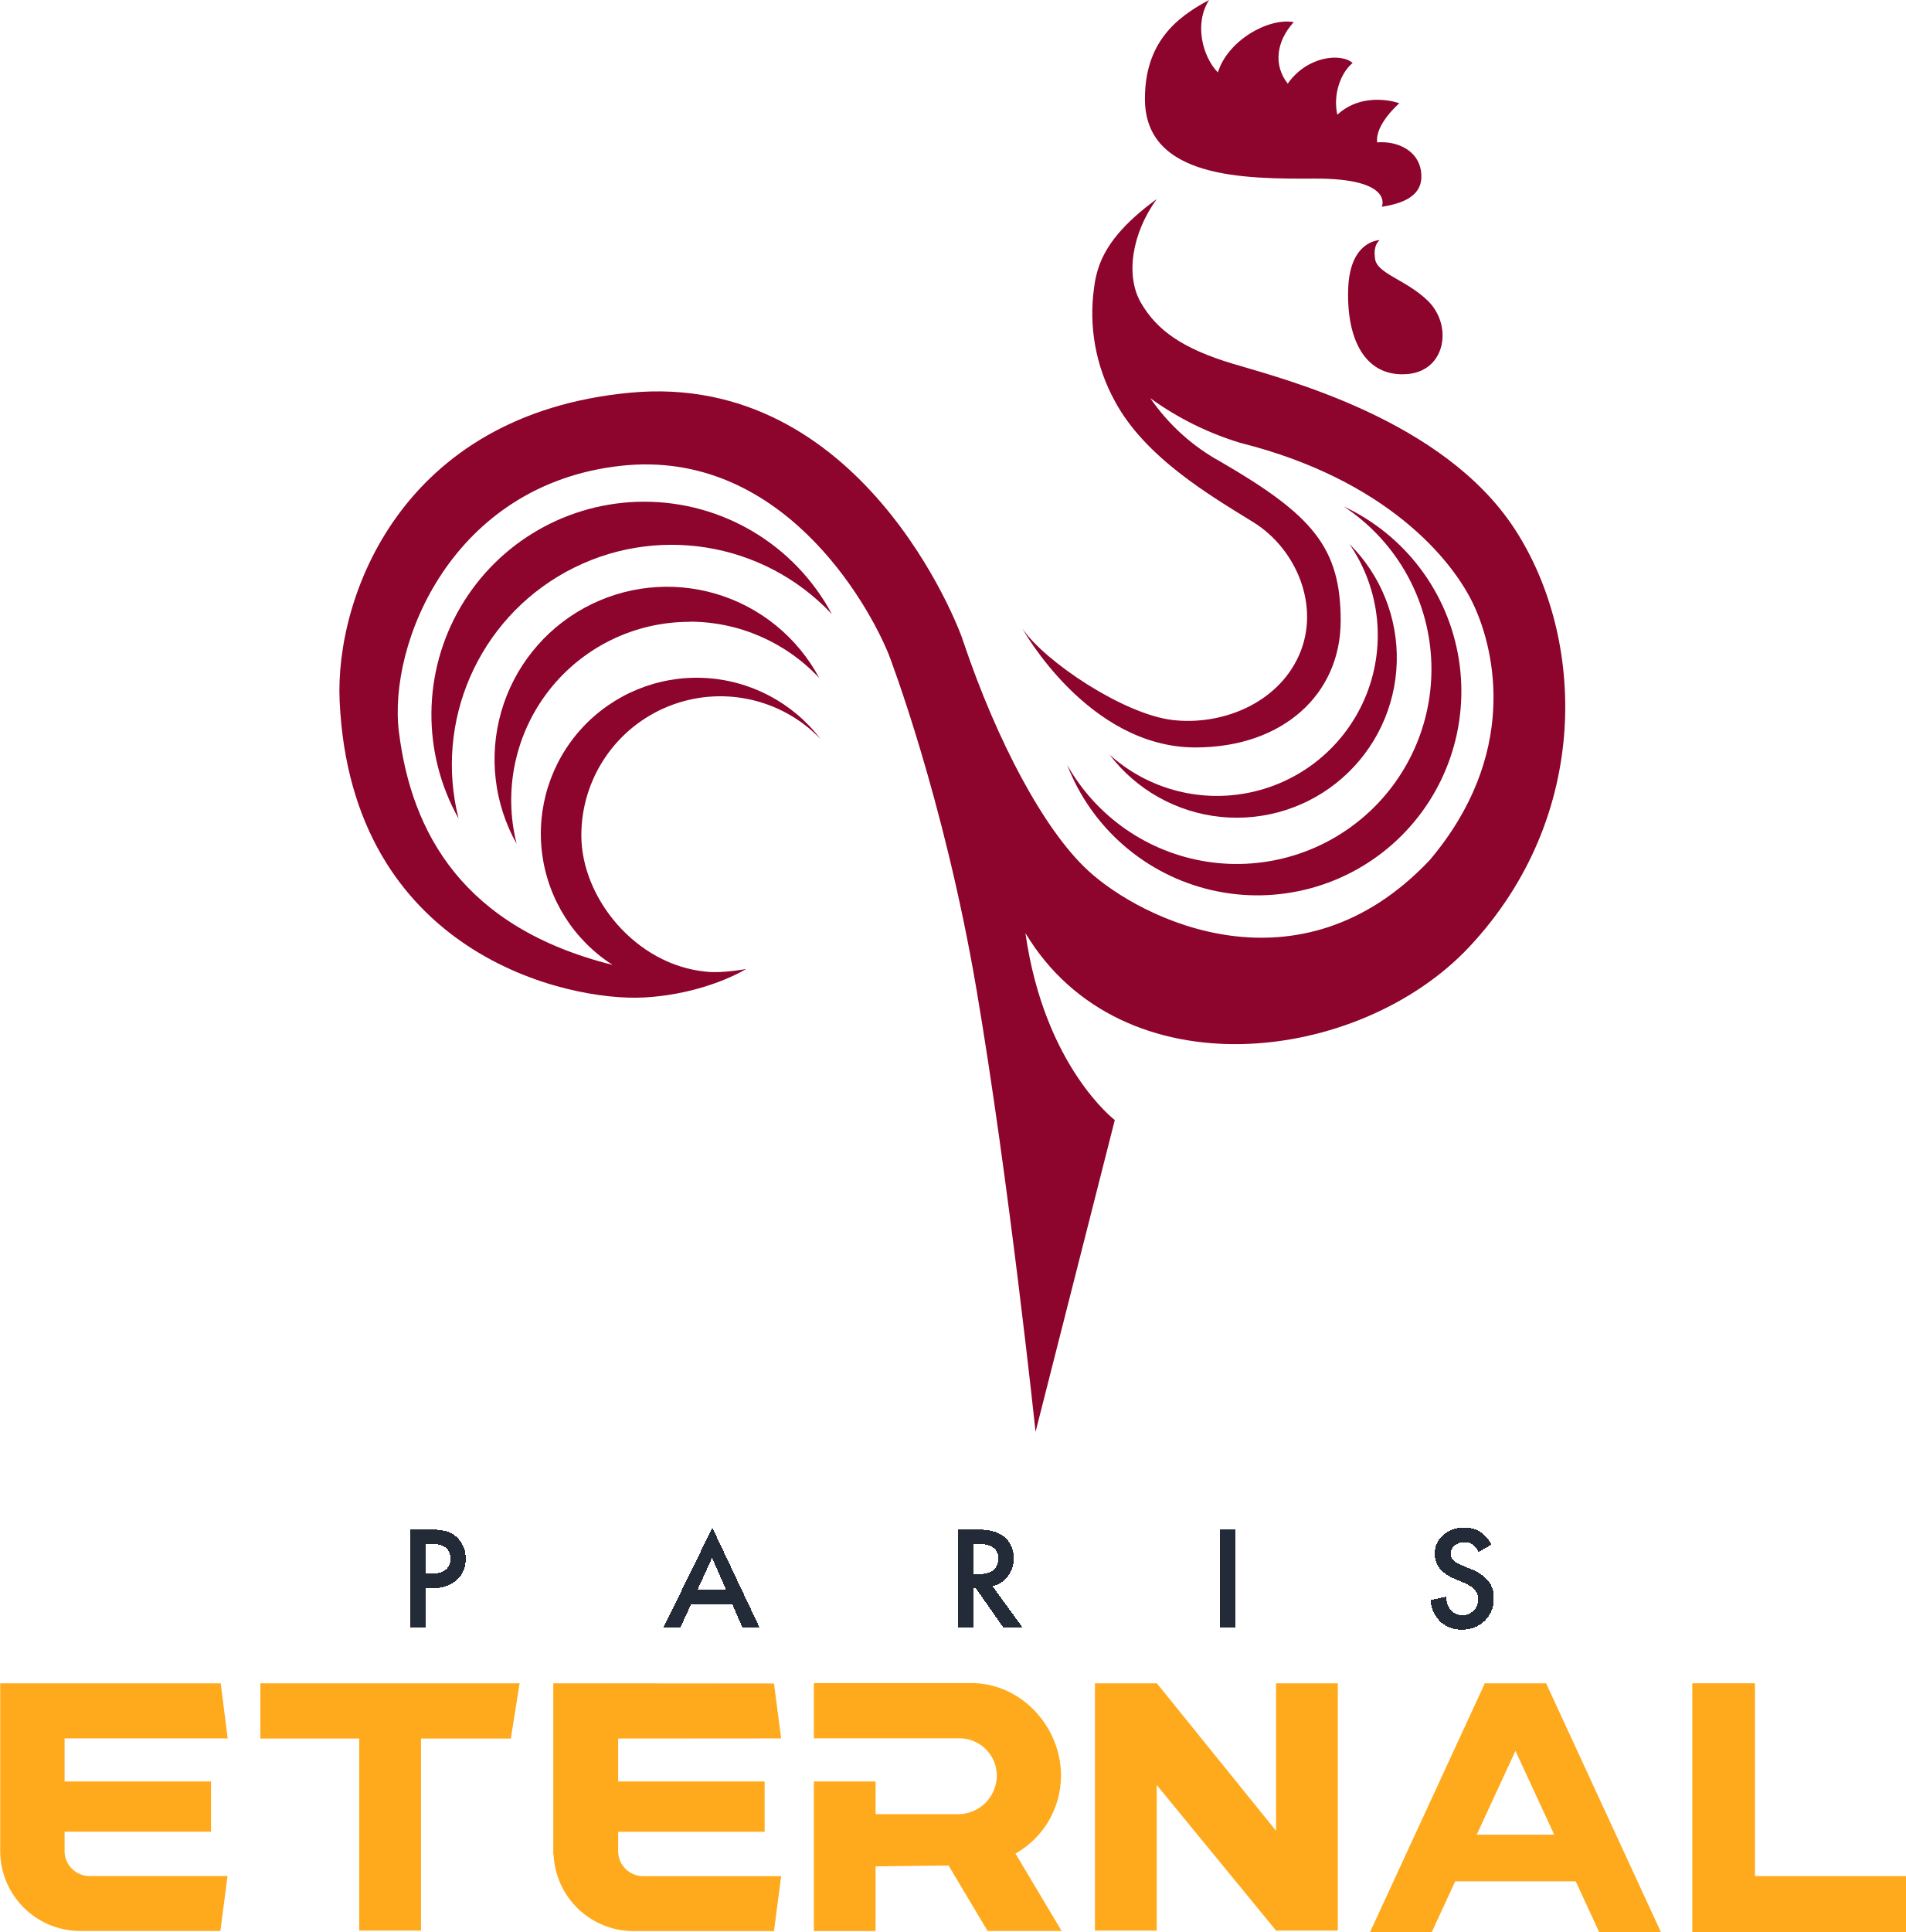 Paris Eternal's logo